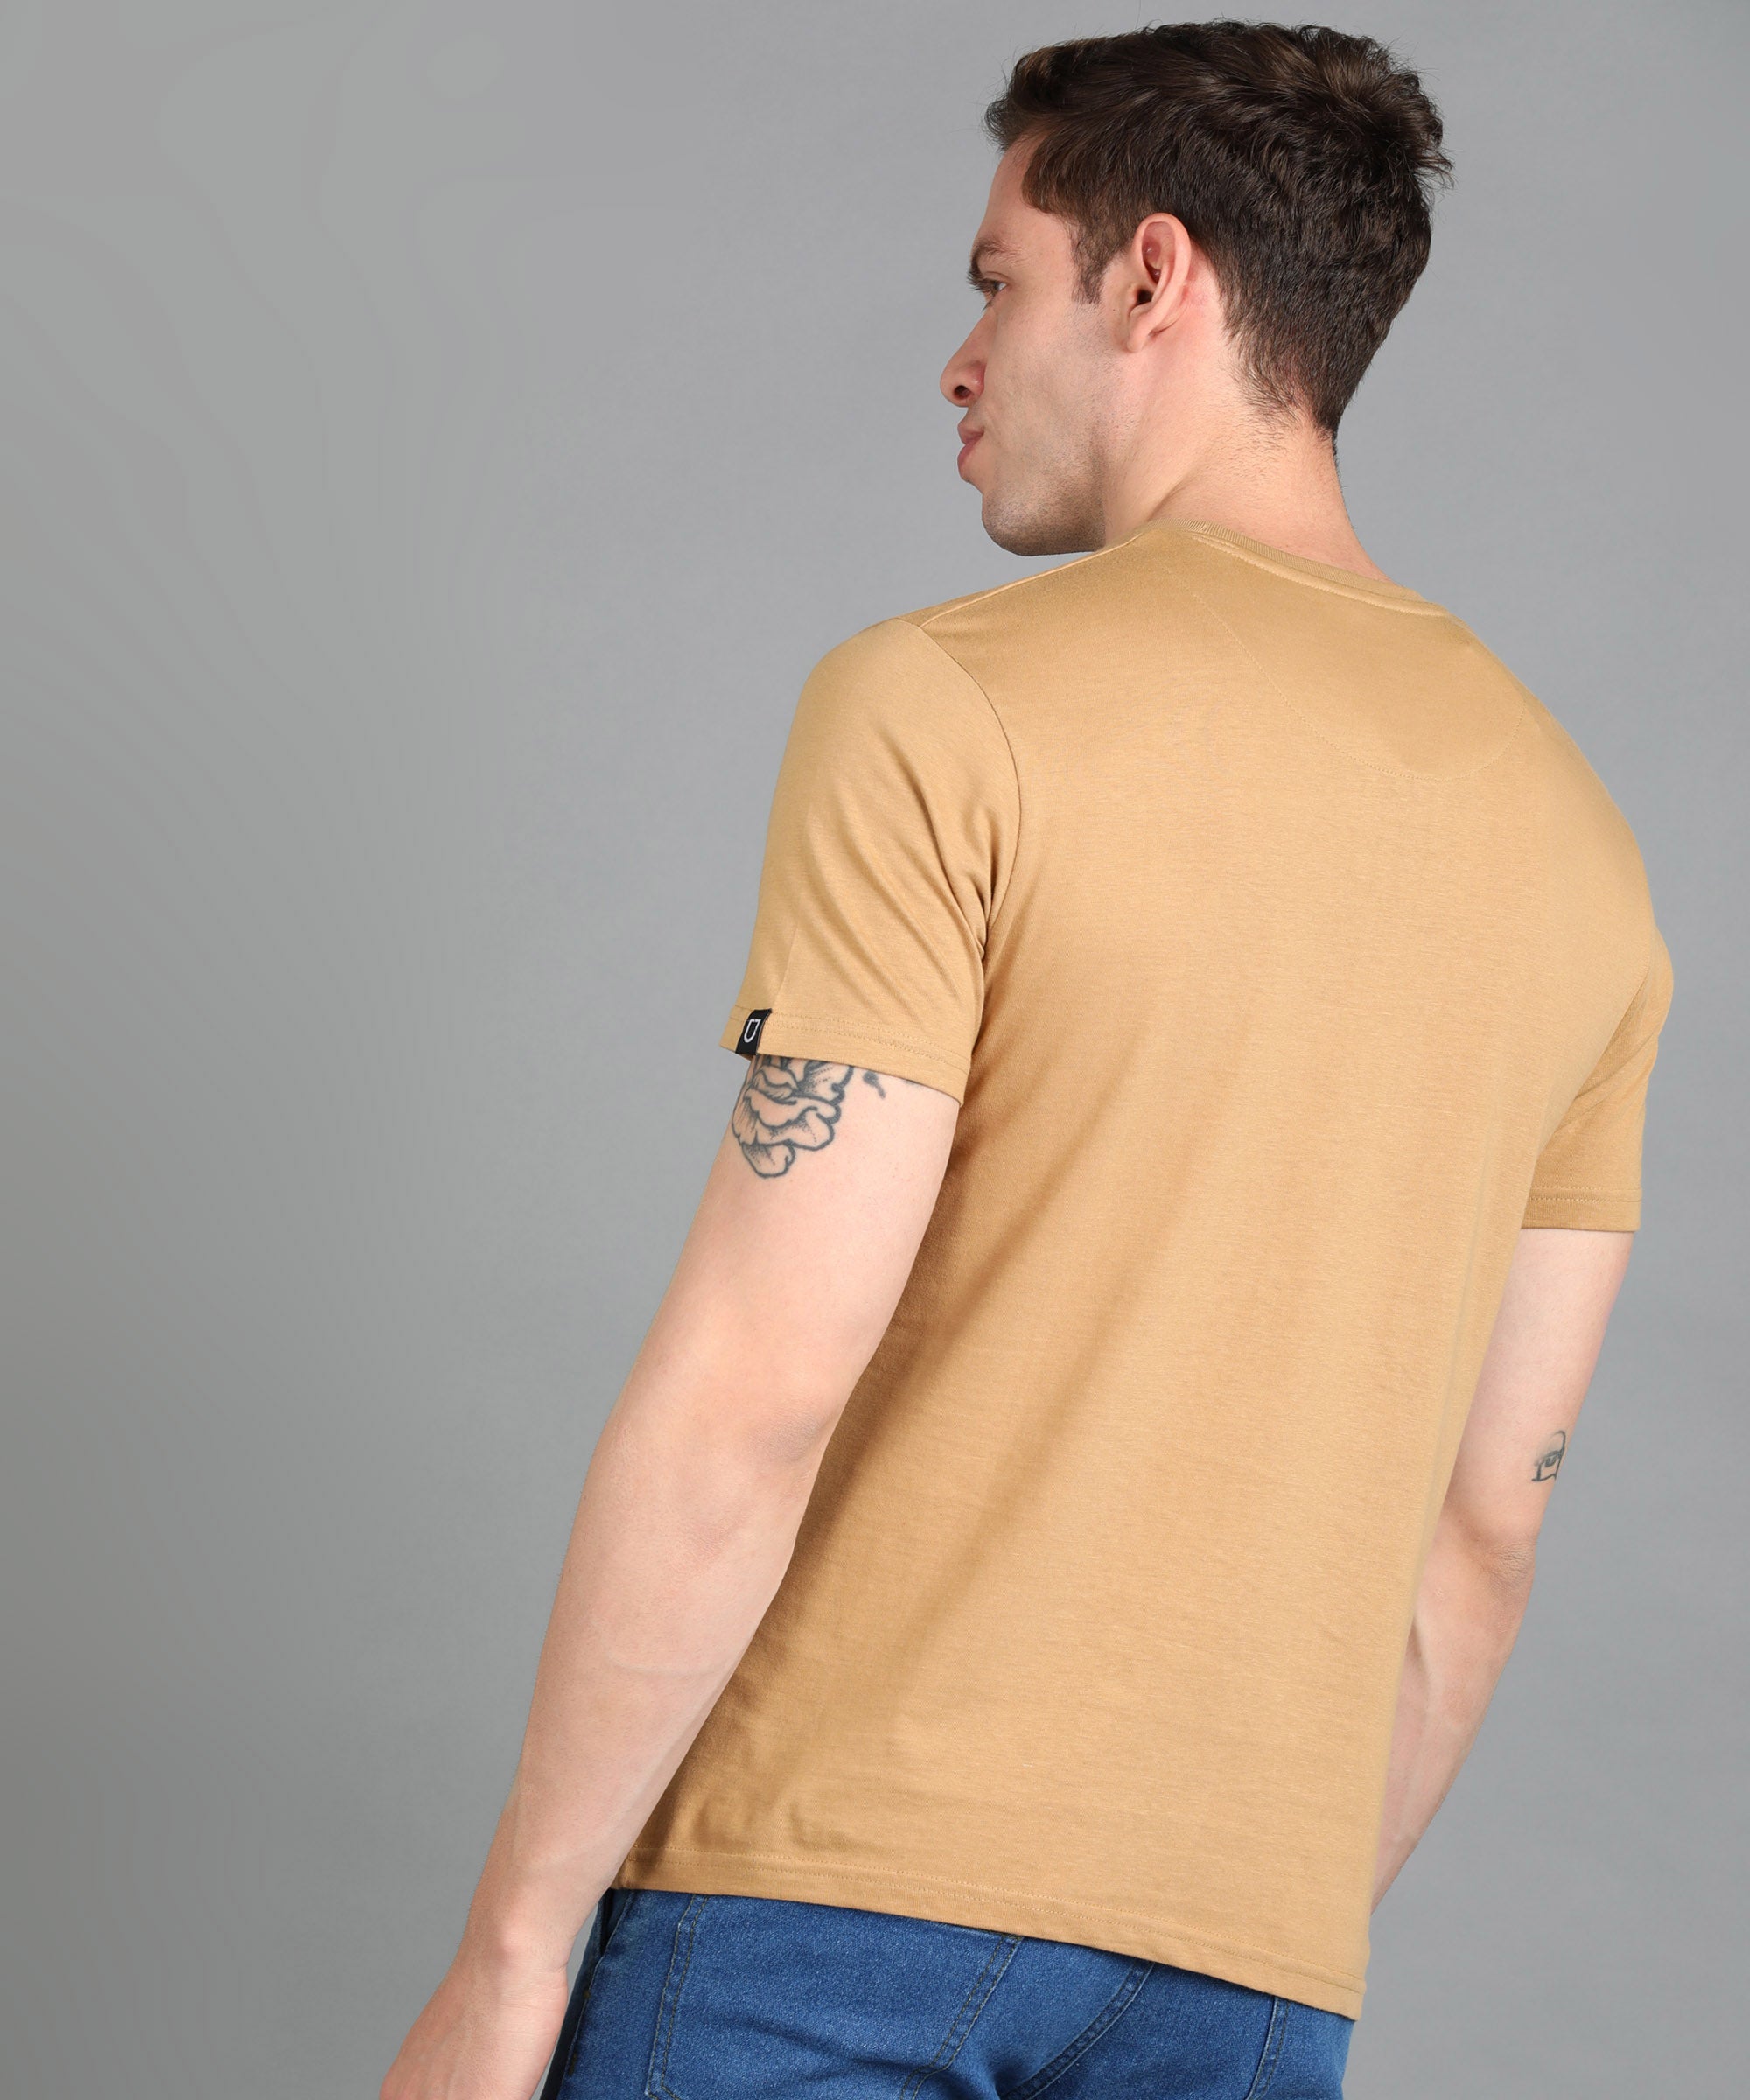 Urbano Fashion Men's Khaki Graphic Printed Round Neck Half Sleeve Slim Fit Cotton T-Shirt